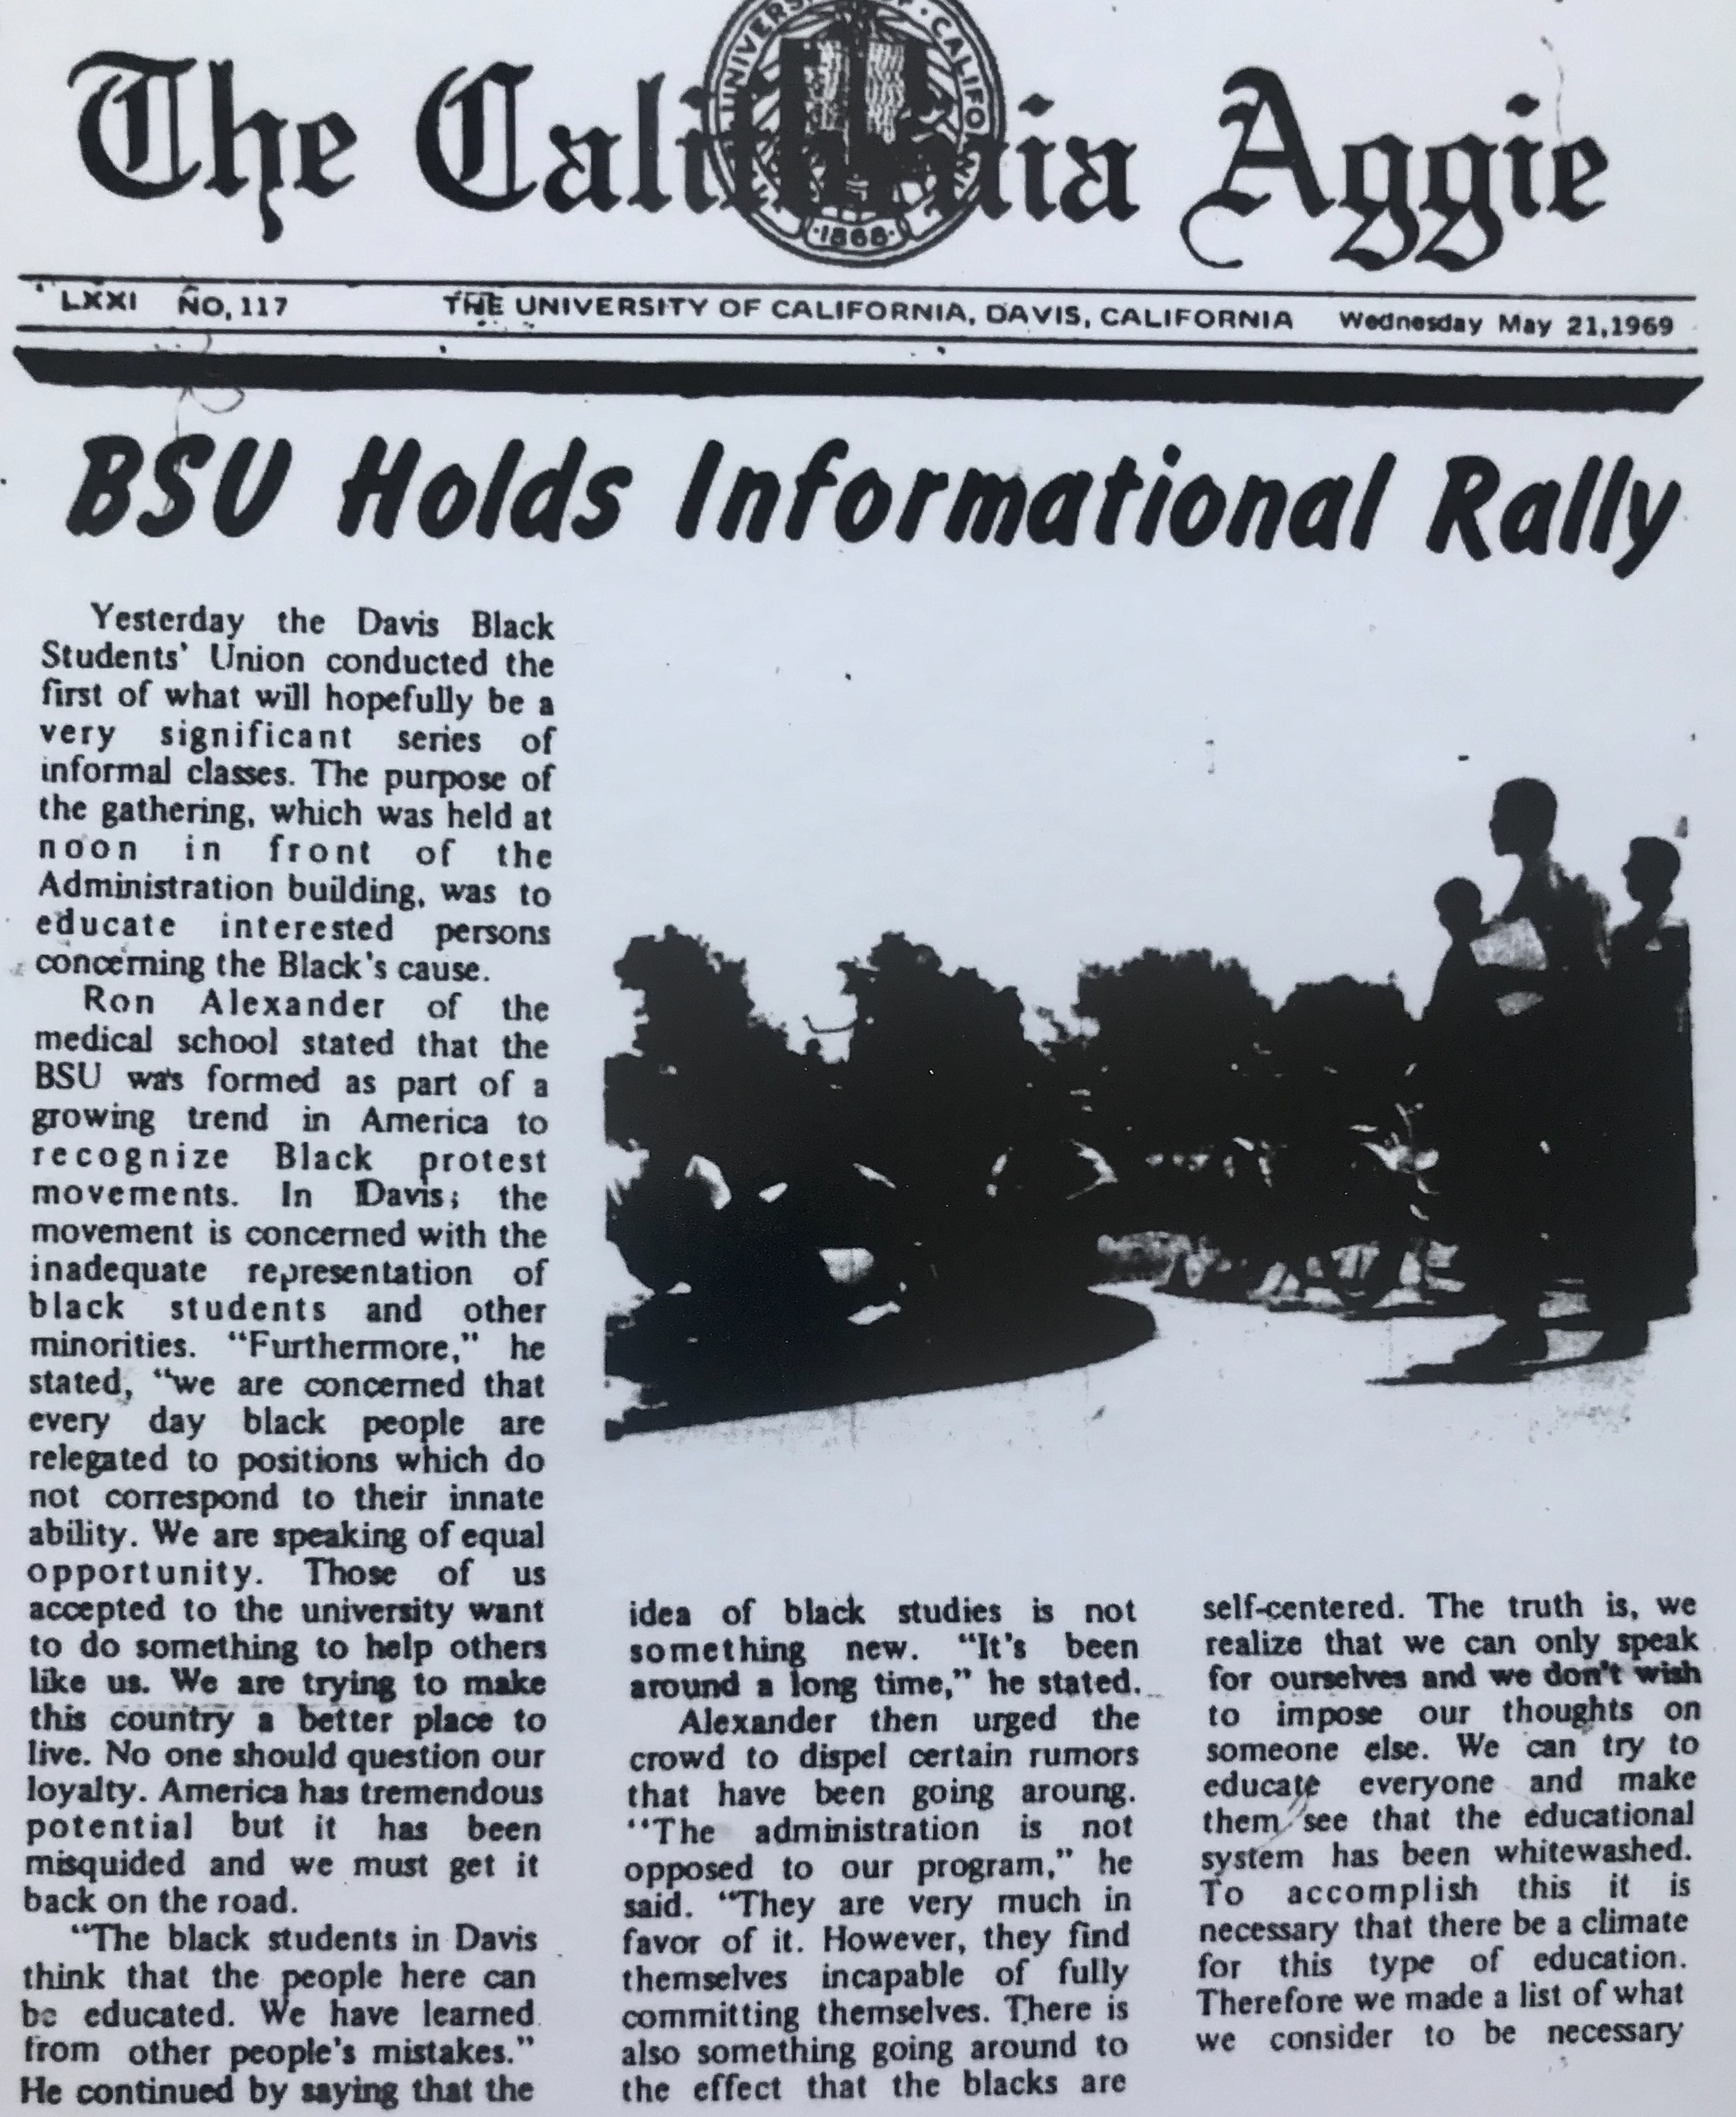 newspaper story of black student union founding at UC Davis